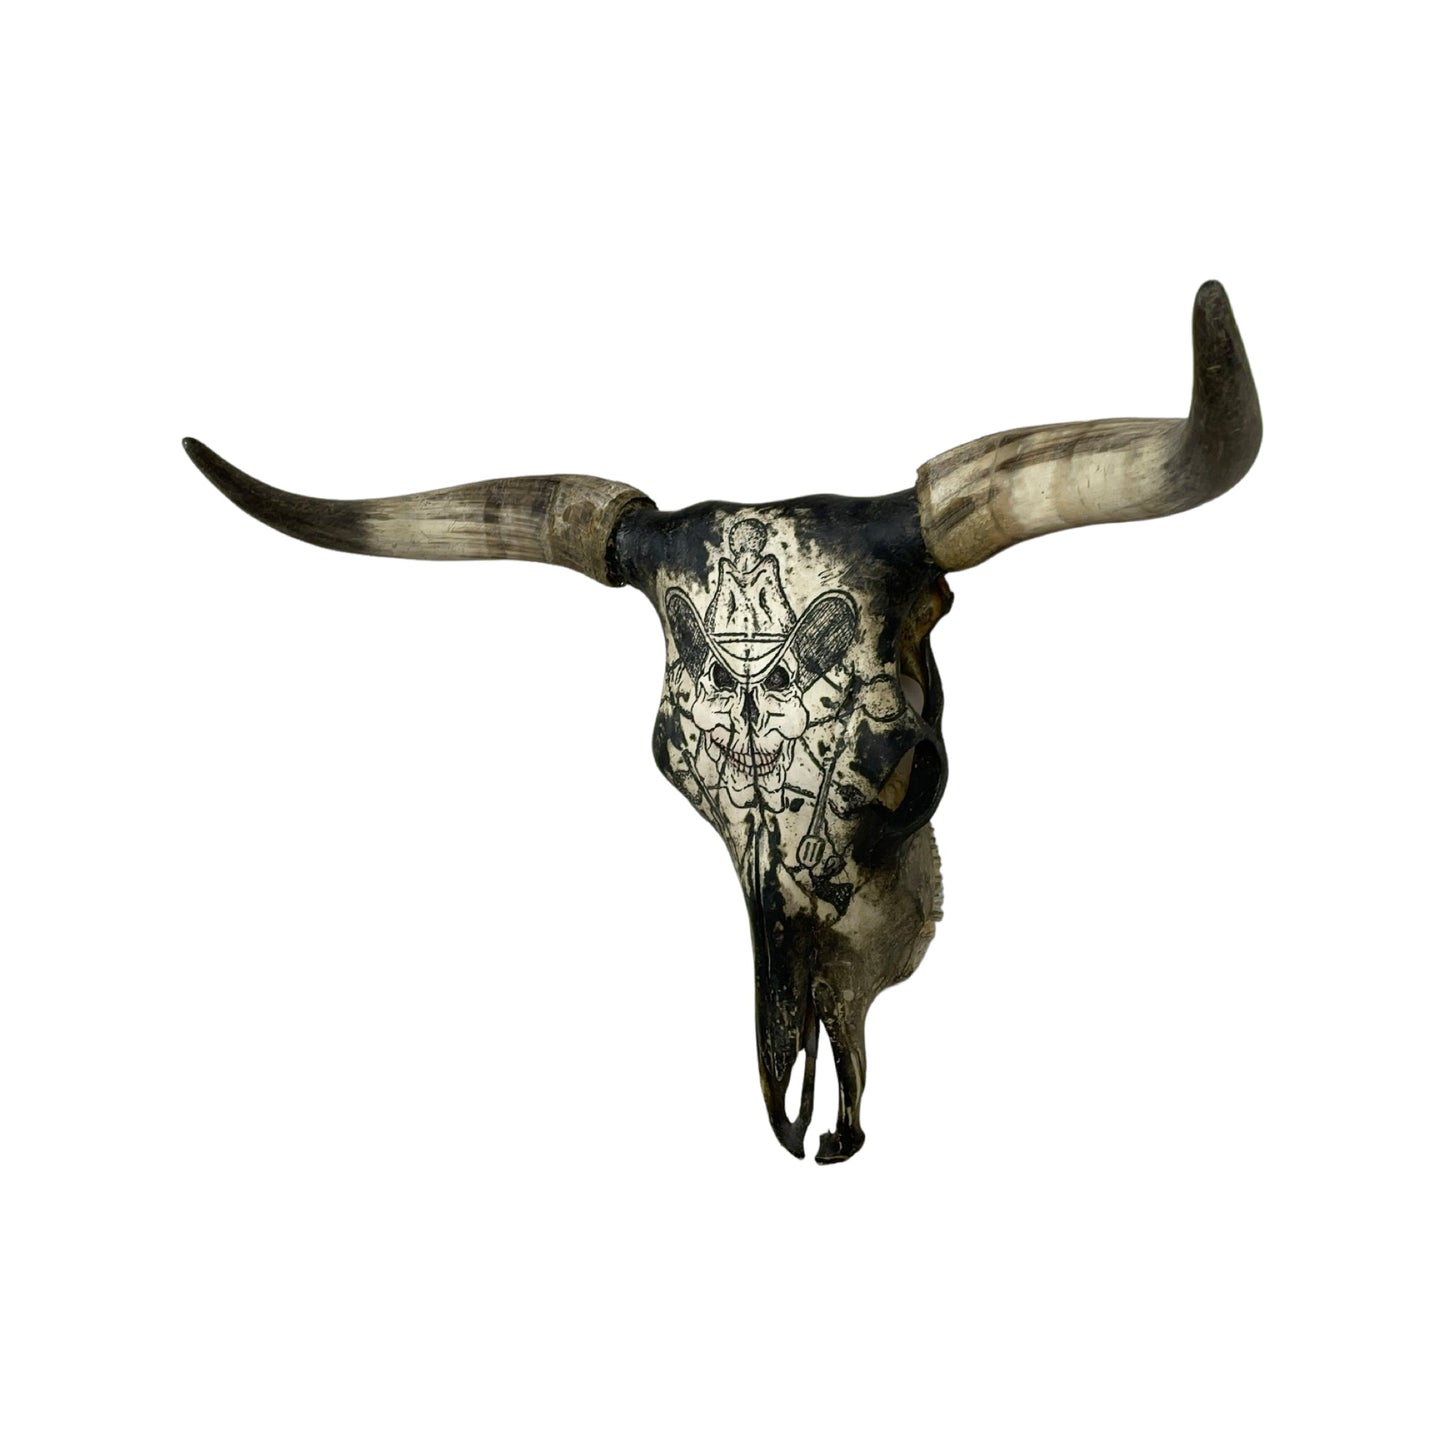 A Longhorn Engraved Skull Taxidermy Wall Decor featuring a skull wih a cowboy hat